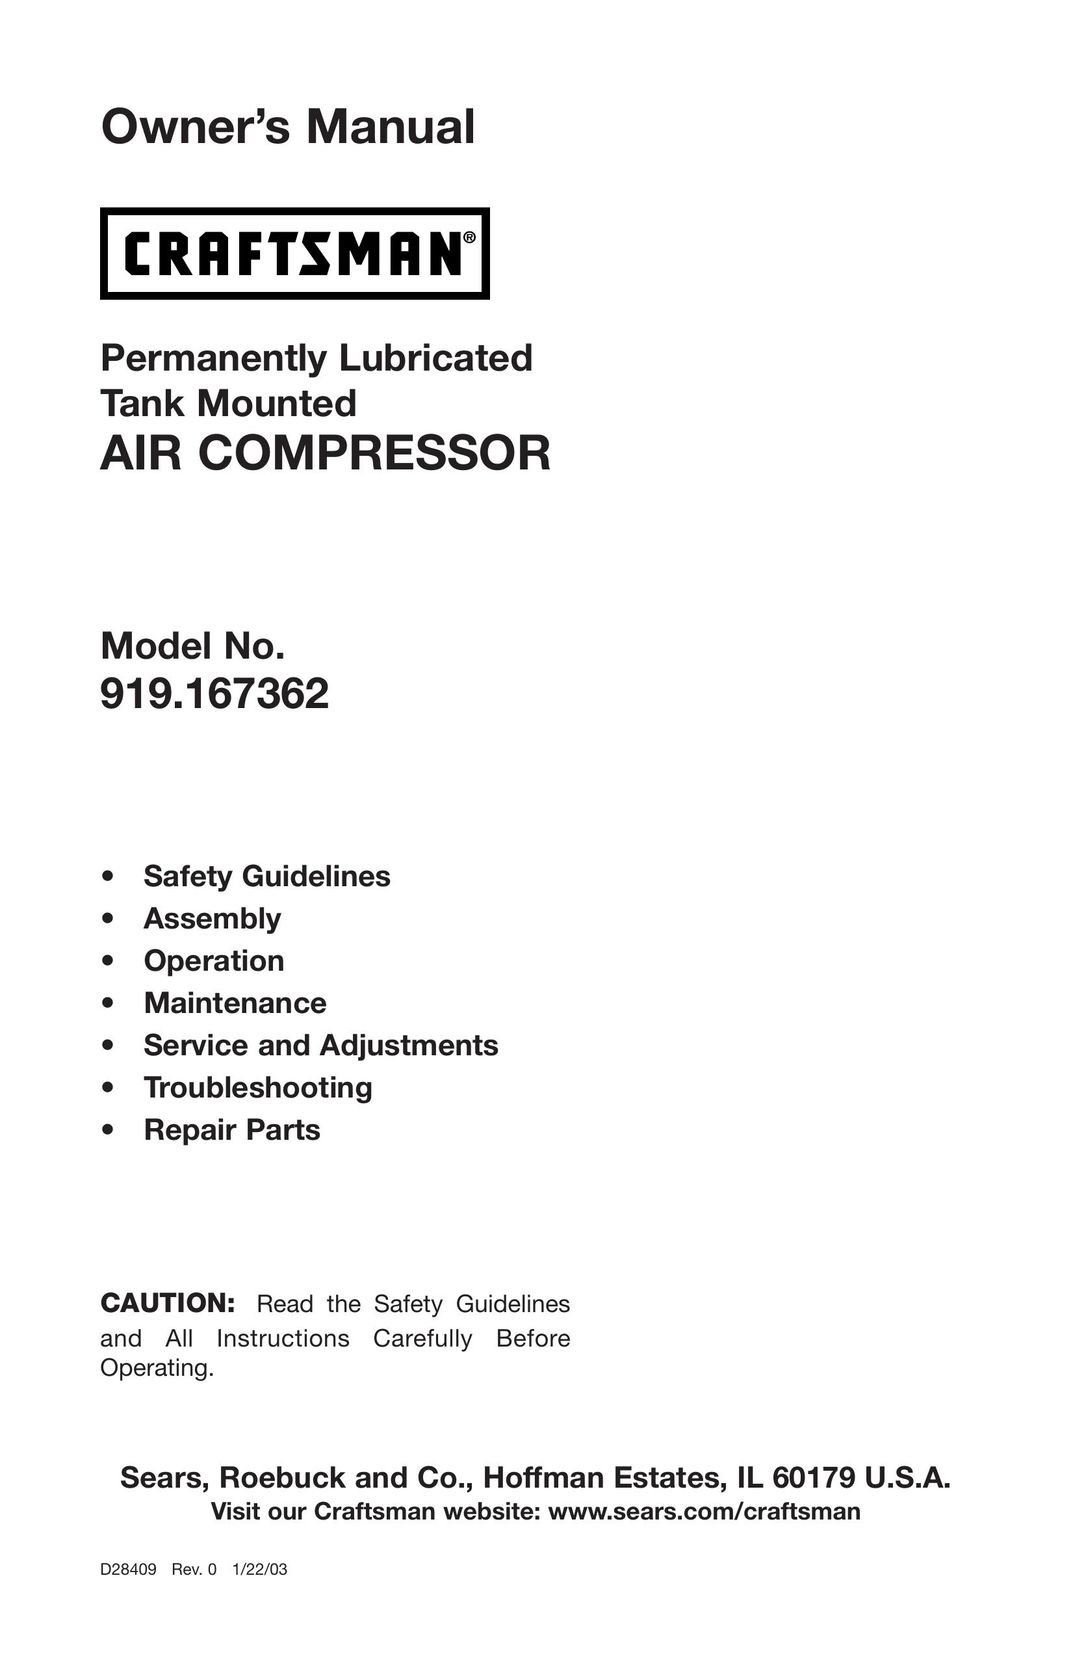 Craftsman 919.167362 Air Compressor User Manual